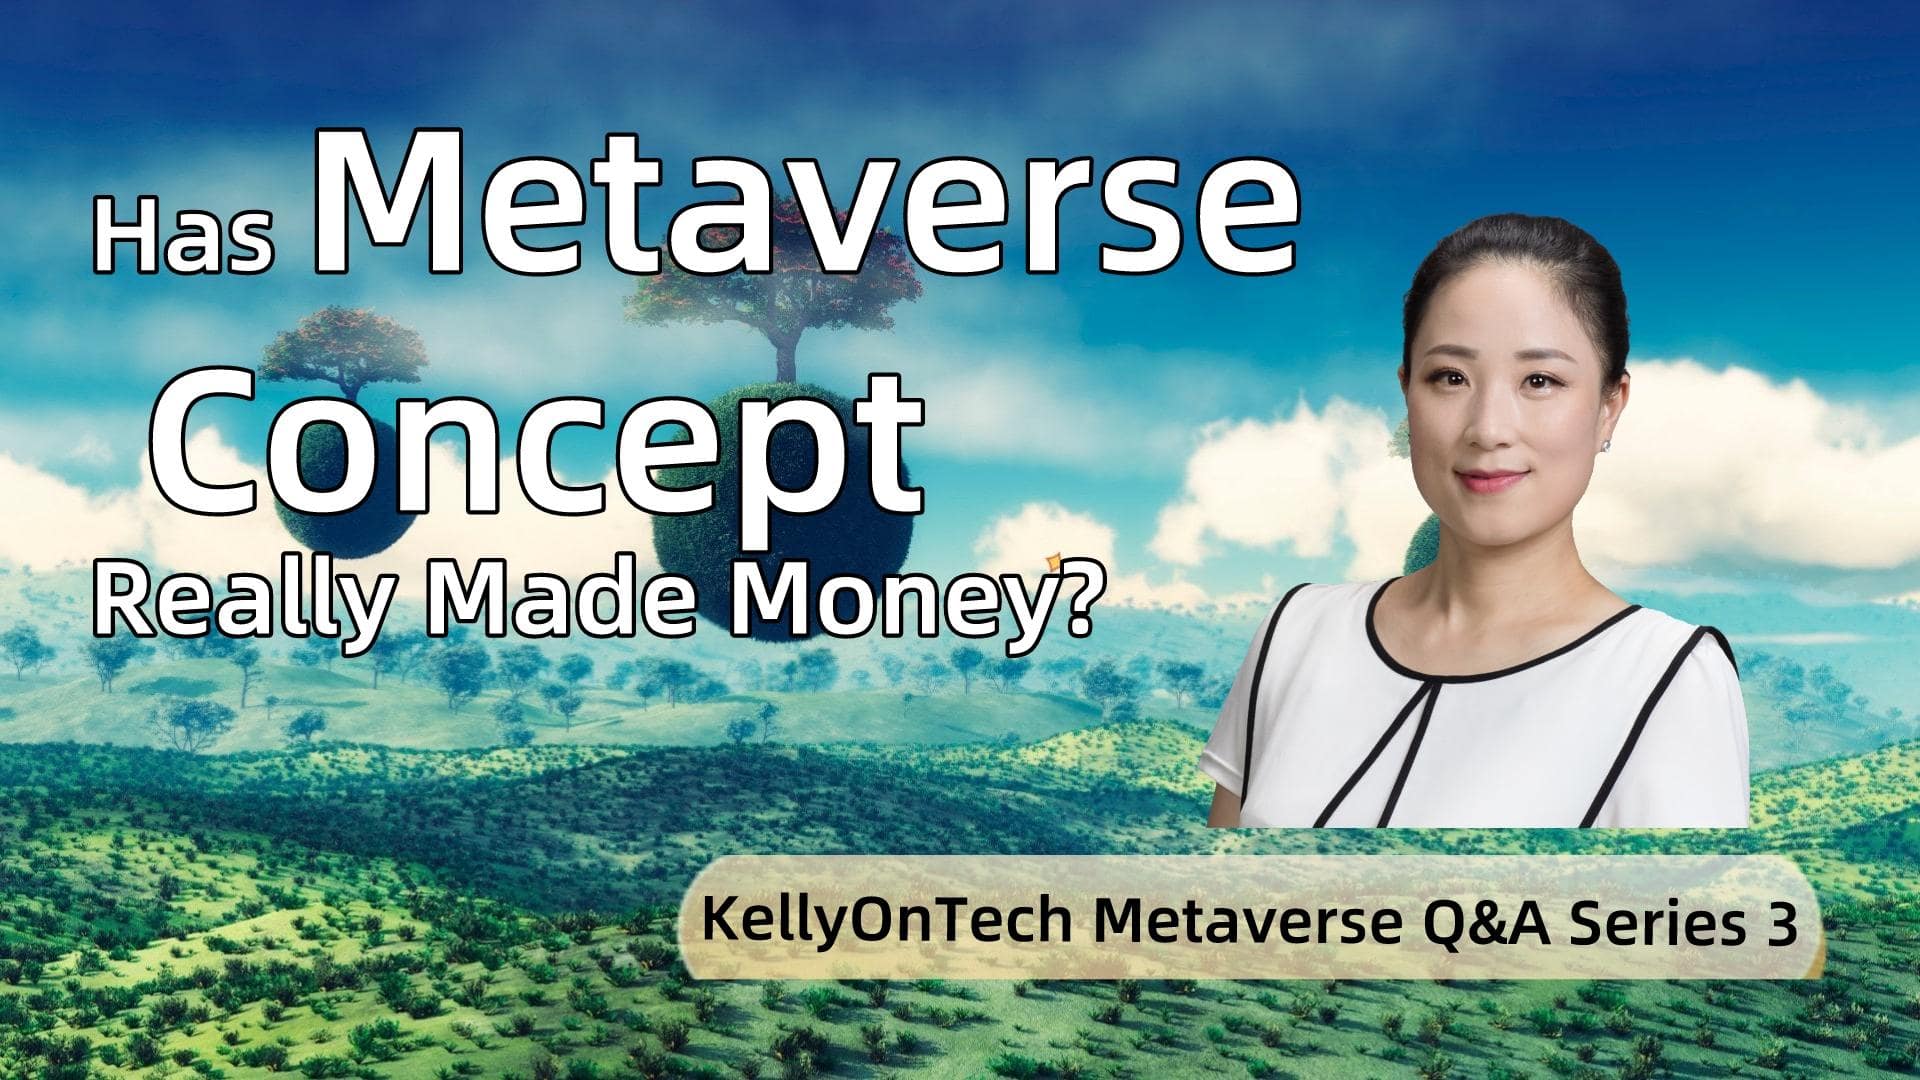 KellyOnTech Has metaverse concept really made money